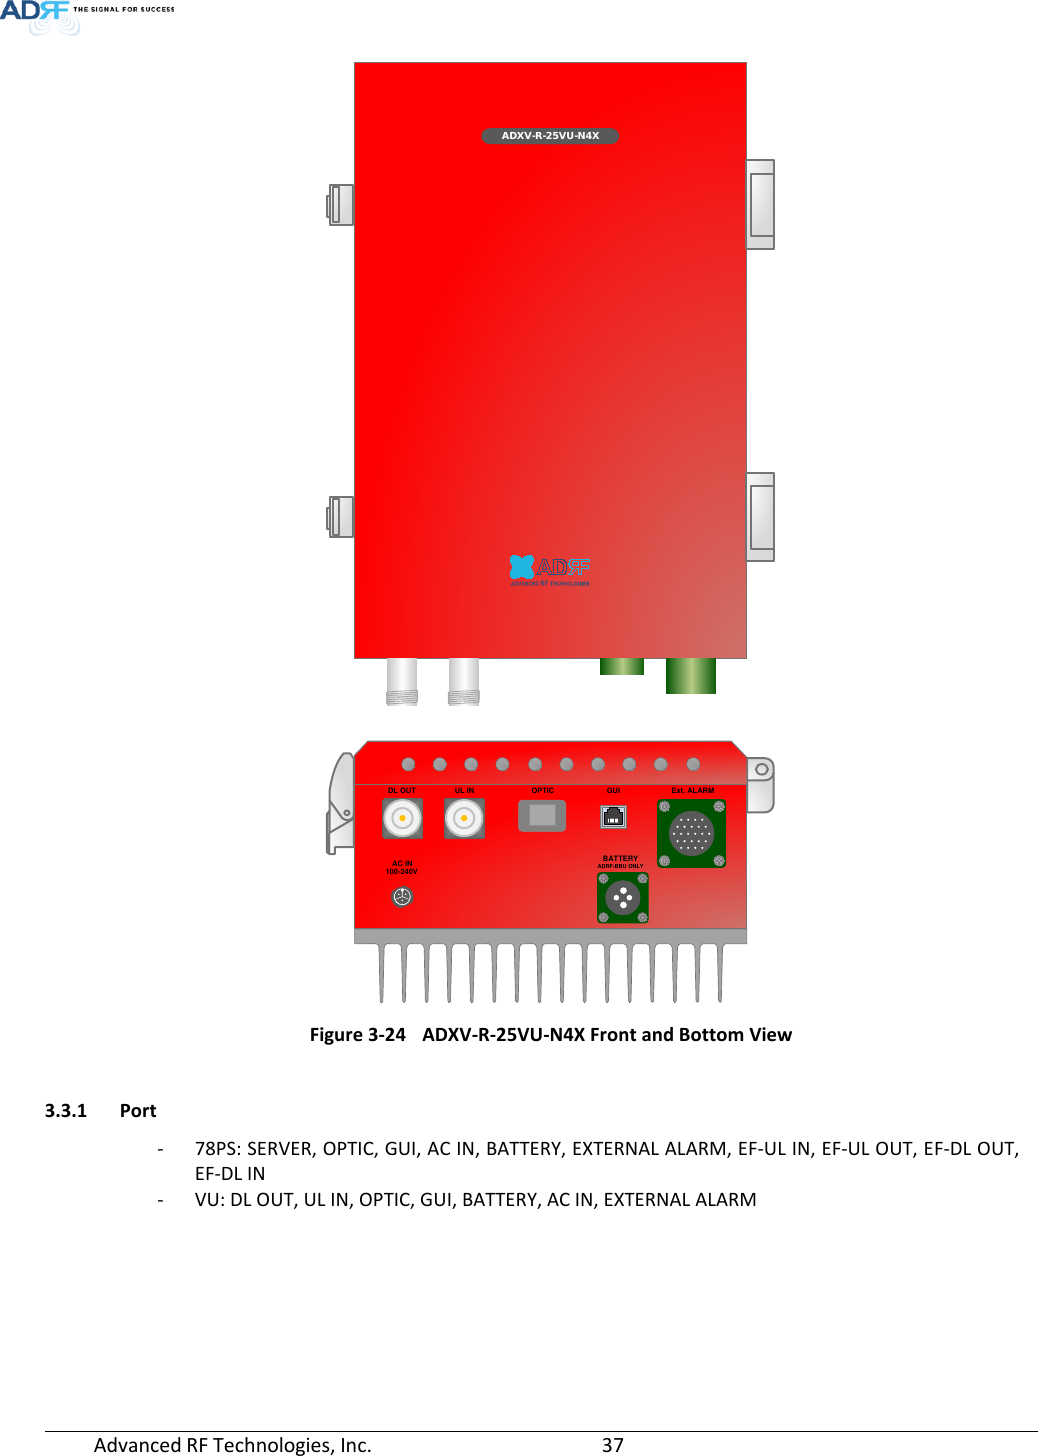 Page 37 of ADRF KOREA ADXV-R-78P-NA DAS (Distributed Antenna System) User Manual ADXV DAS